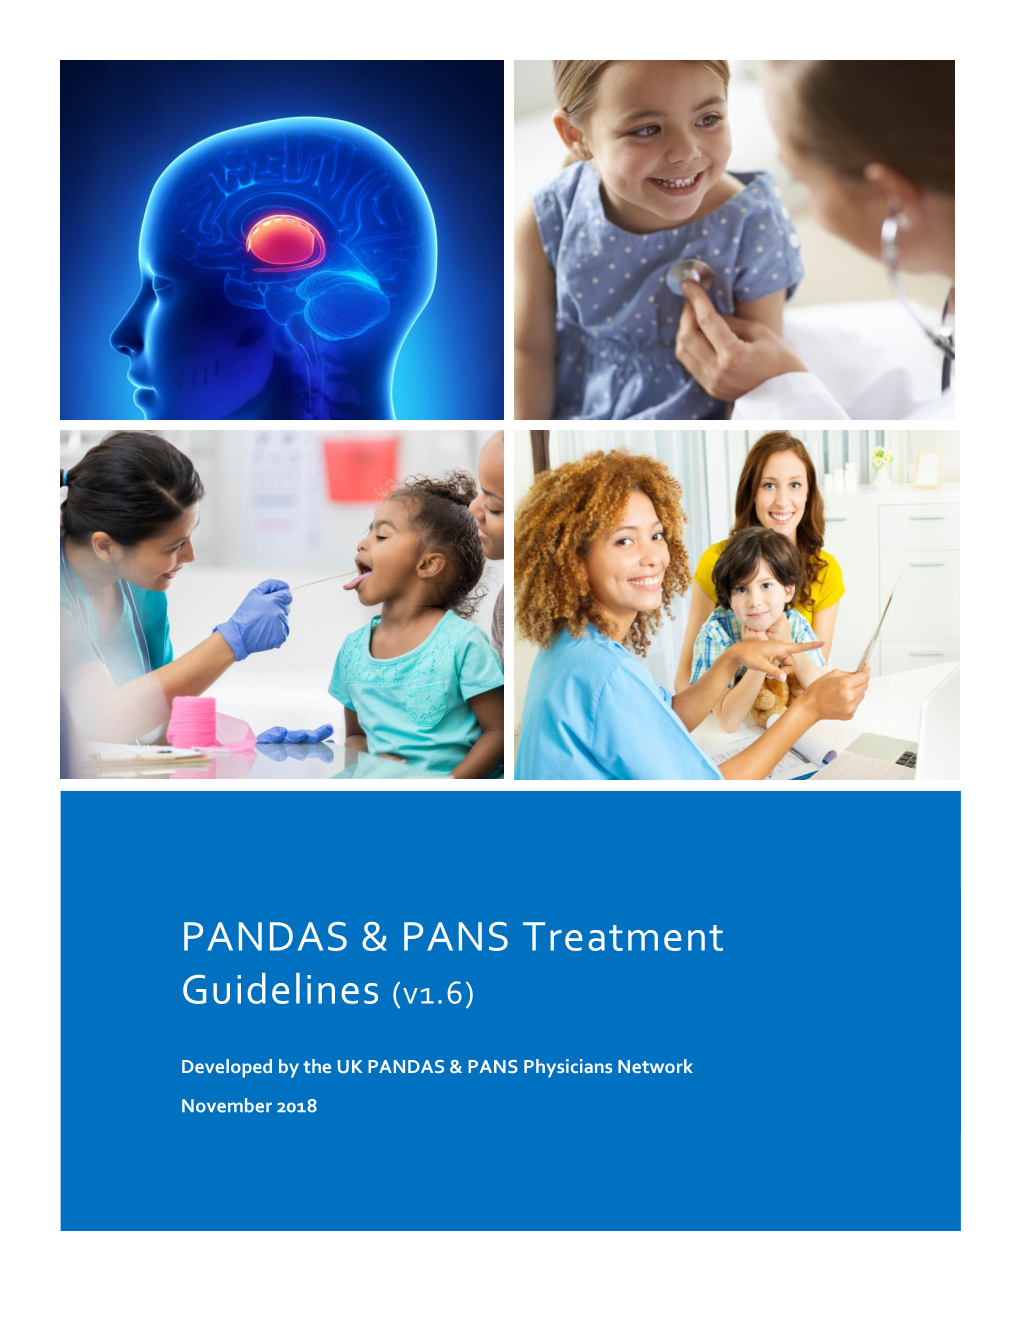 PANDAS & PANS Treatment Protocol